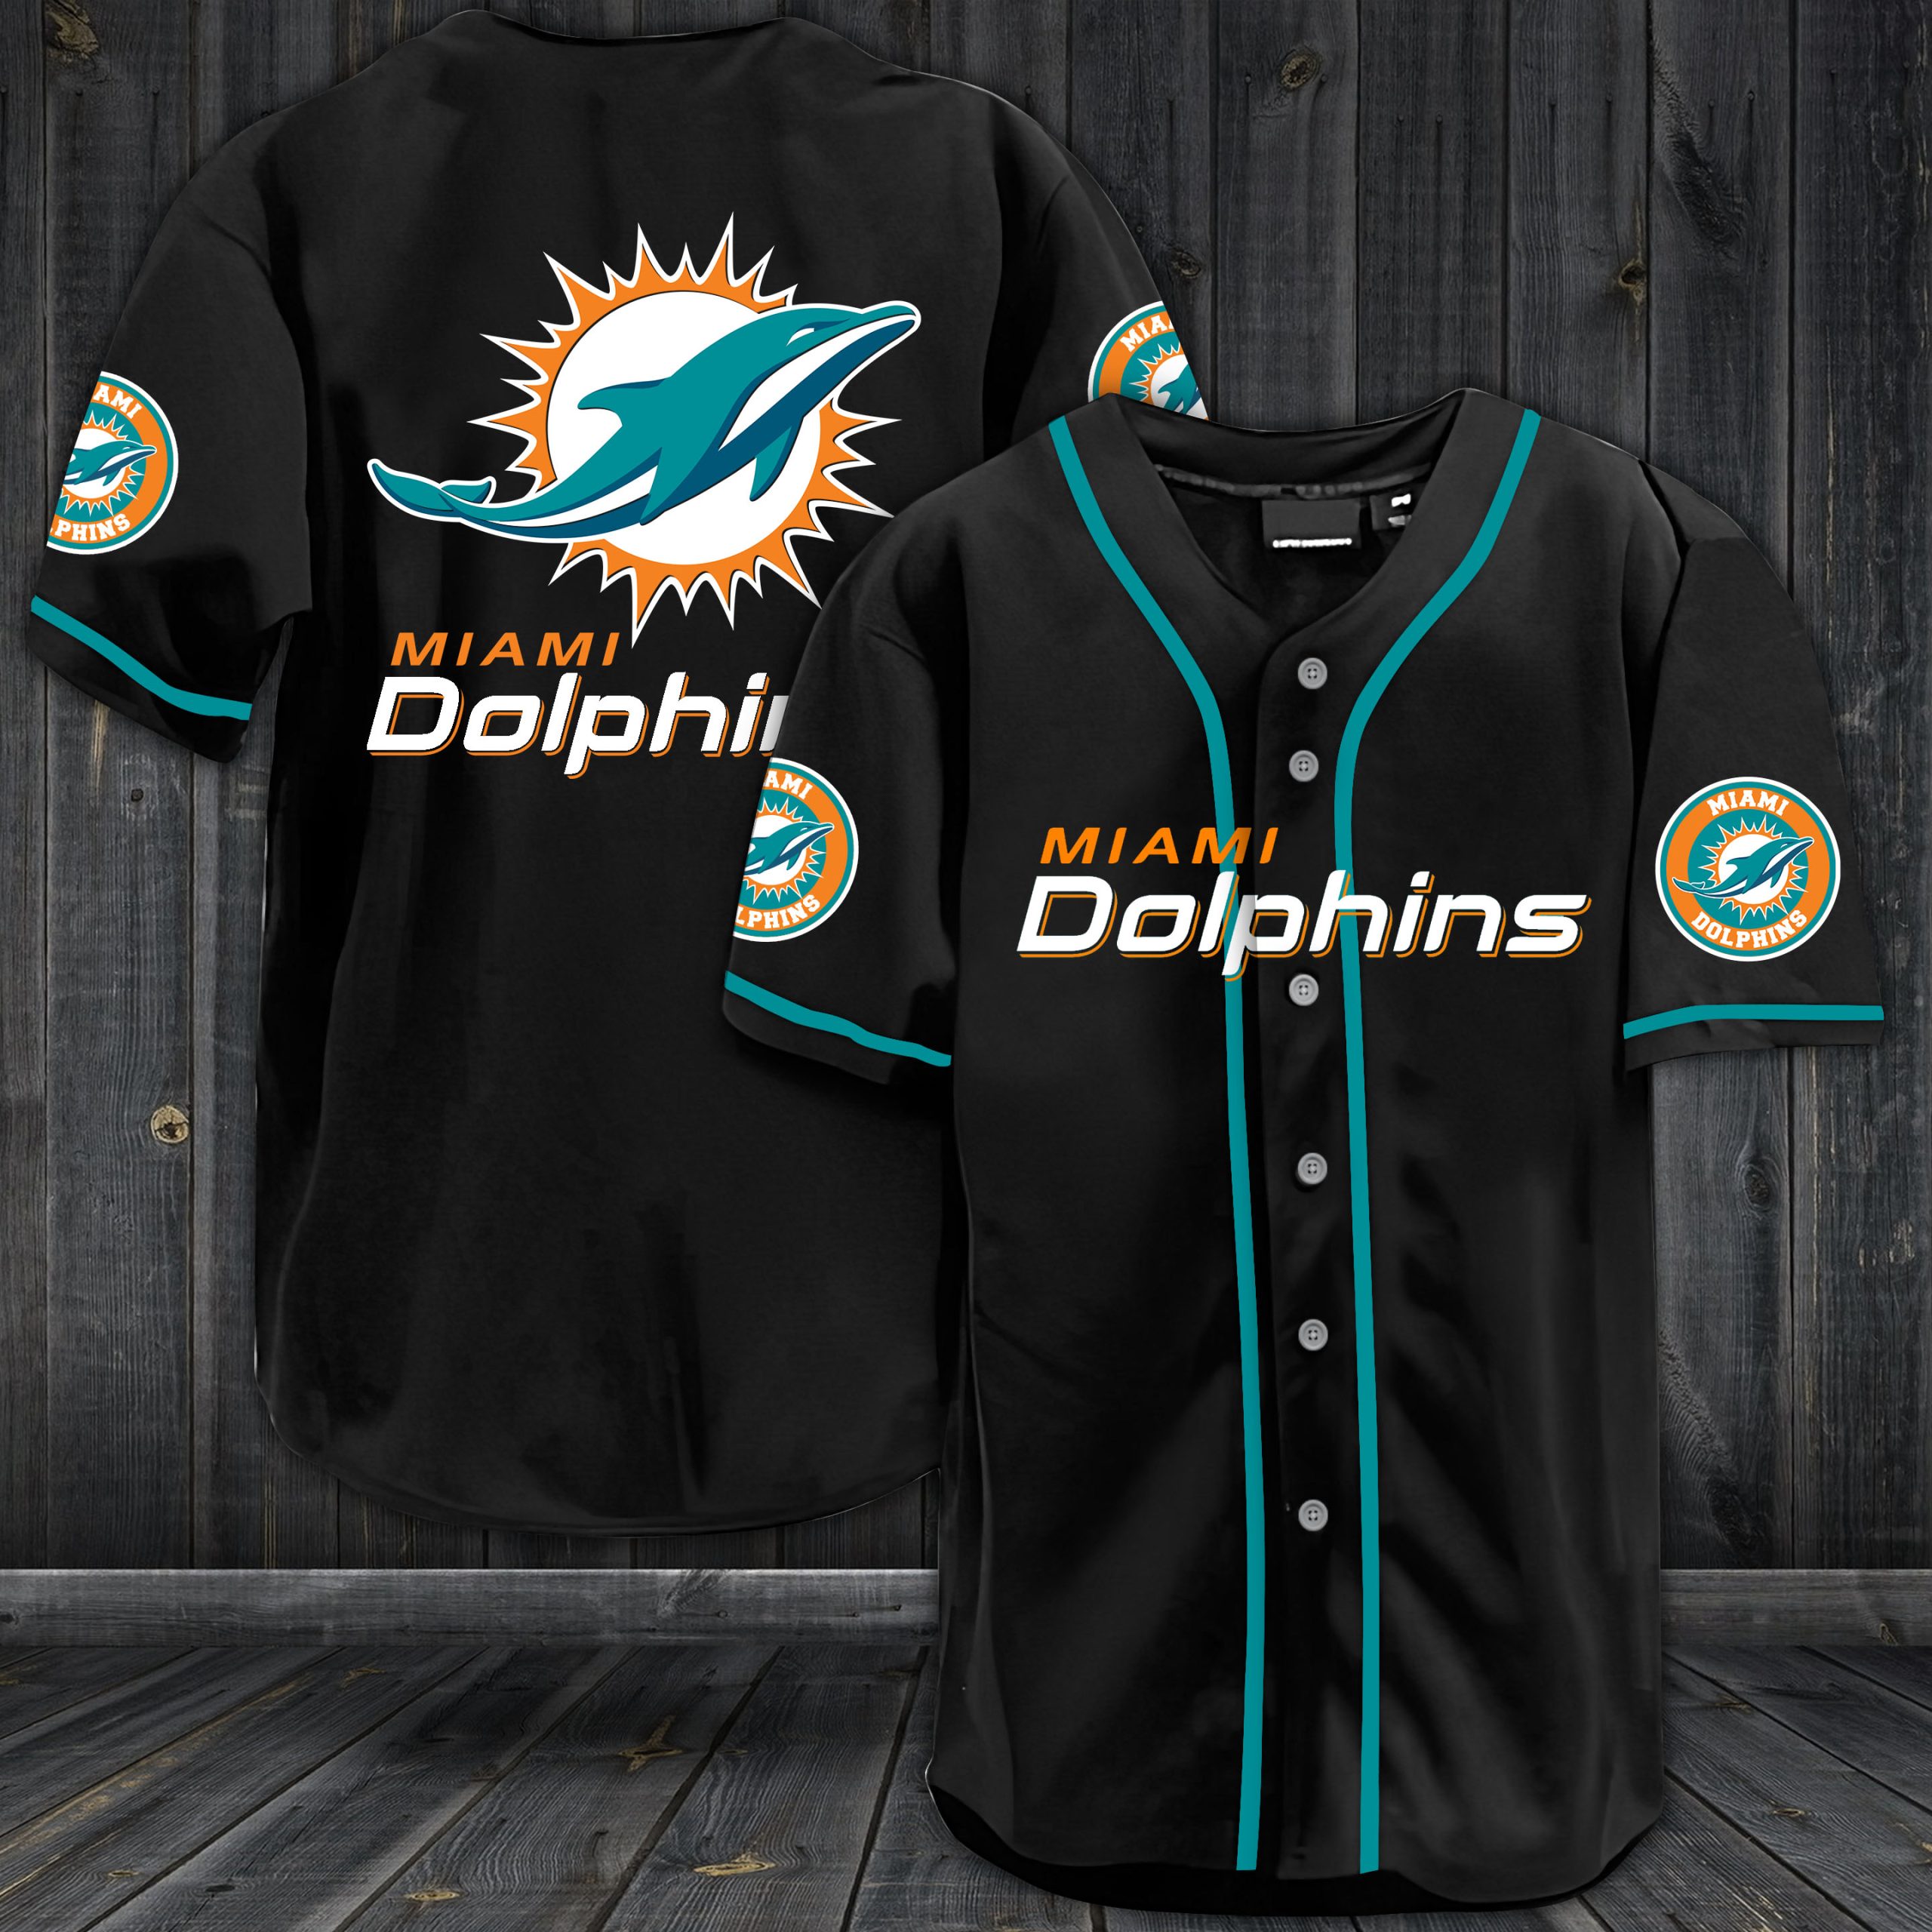 Miami Dolphins Shop - miami dolphins baseball jersey shirts sports black27519 1